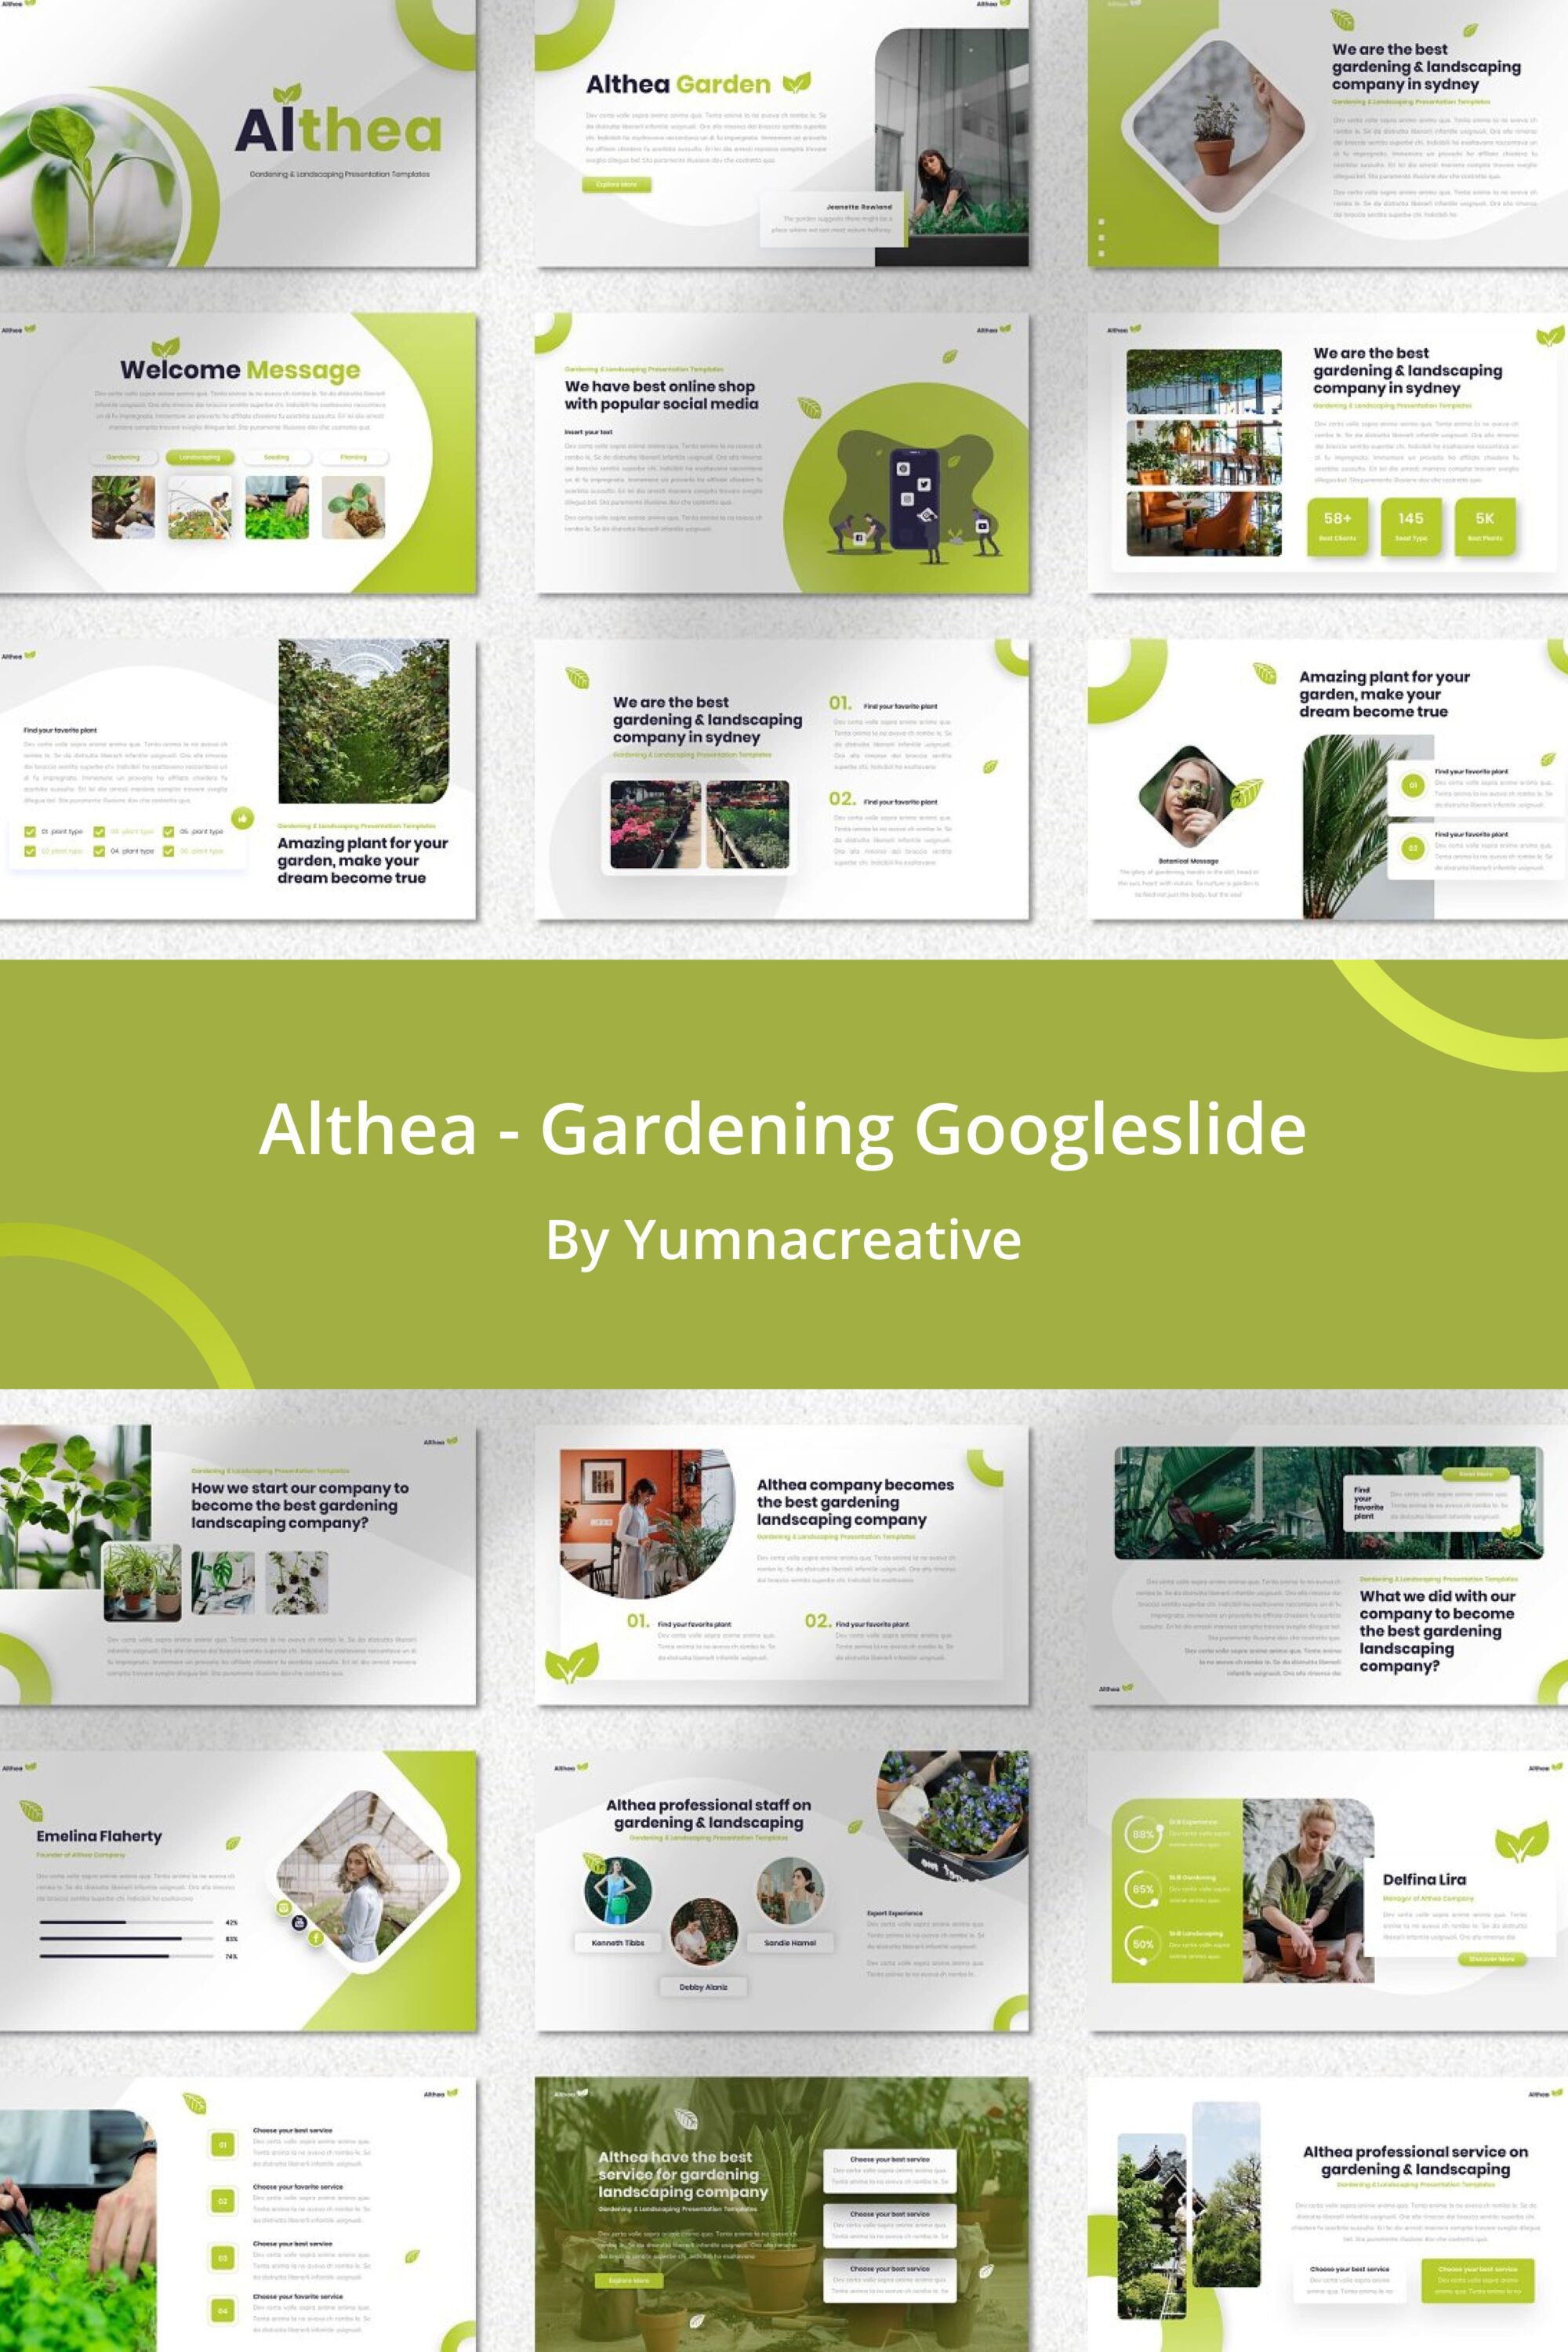 Althea gardening google slide - pinterest image preview.